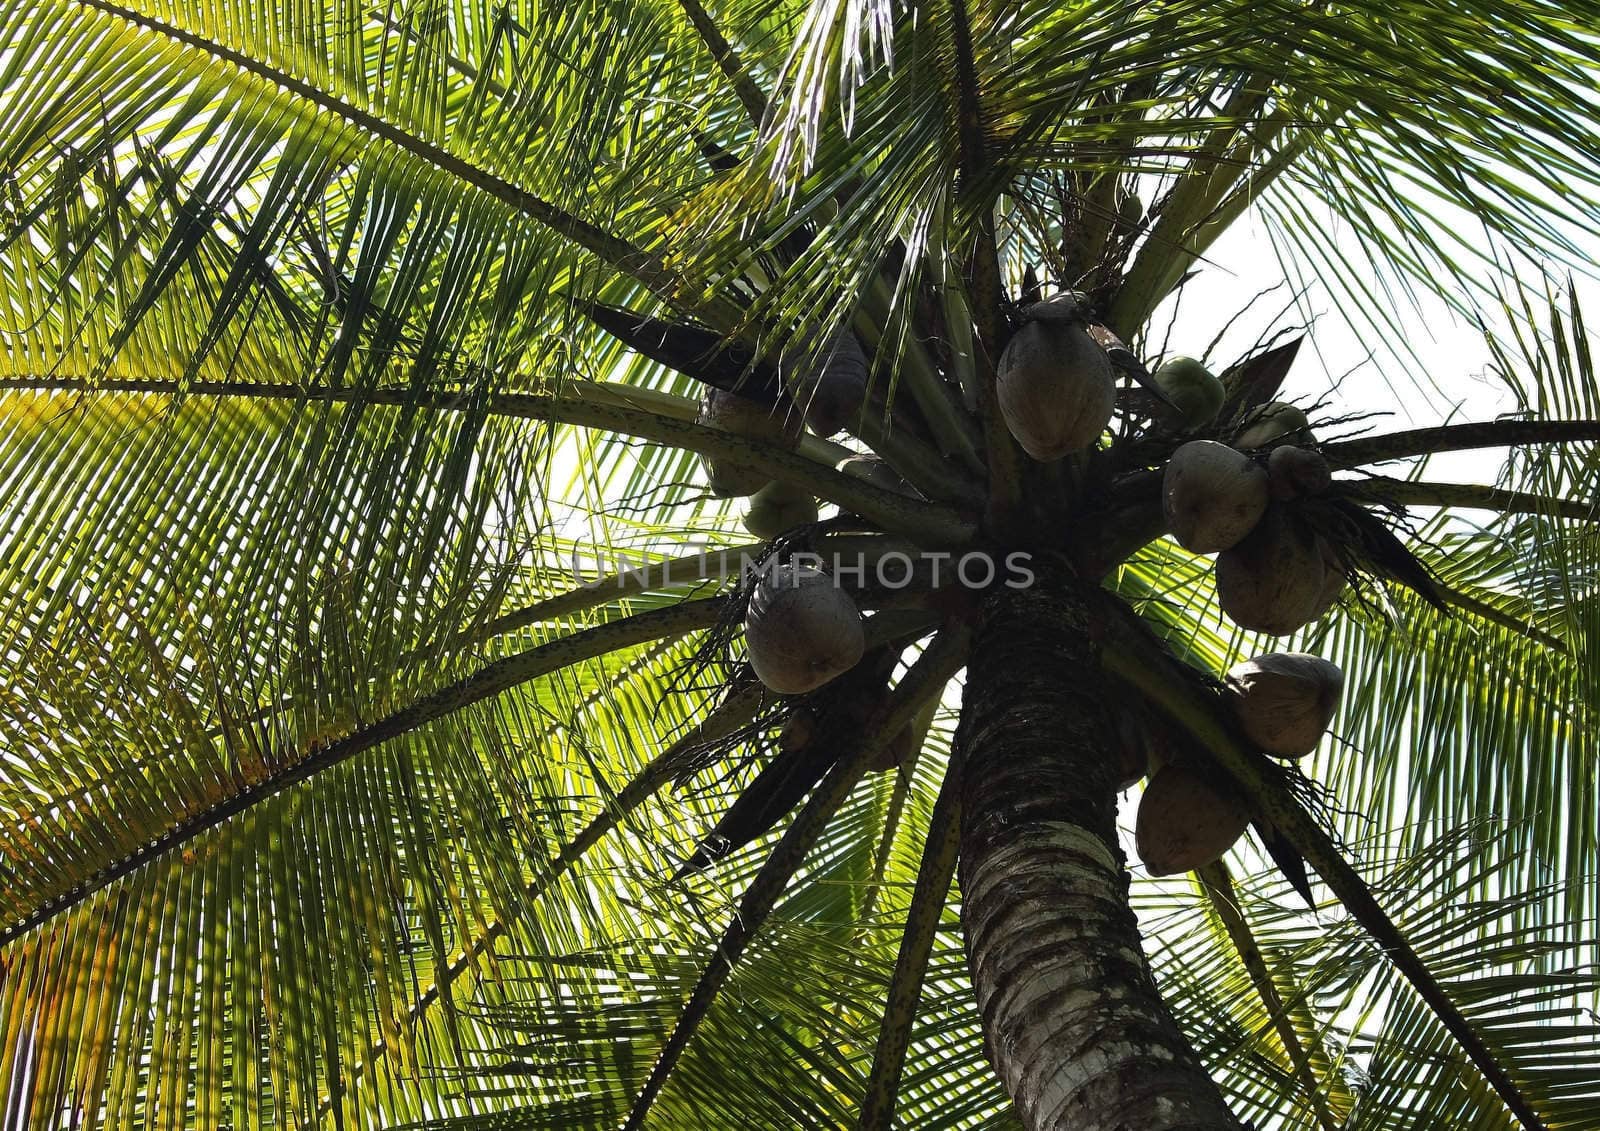 The coconut palm, Cocos nucifera